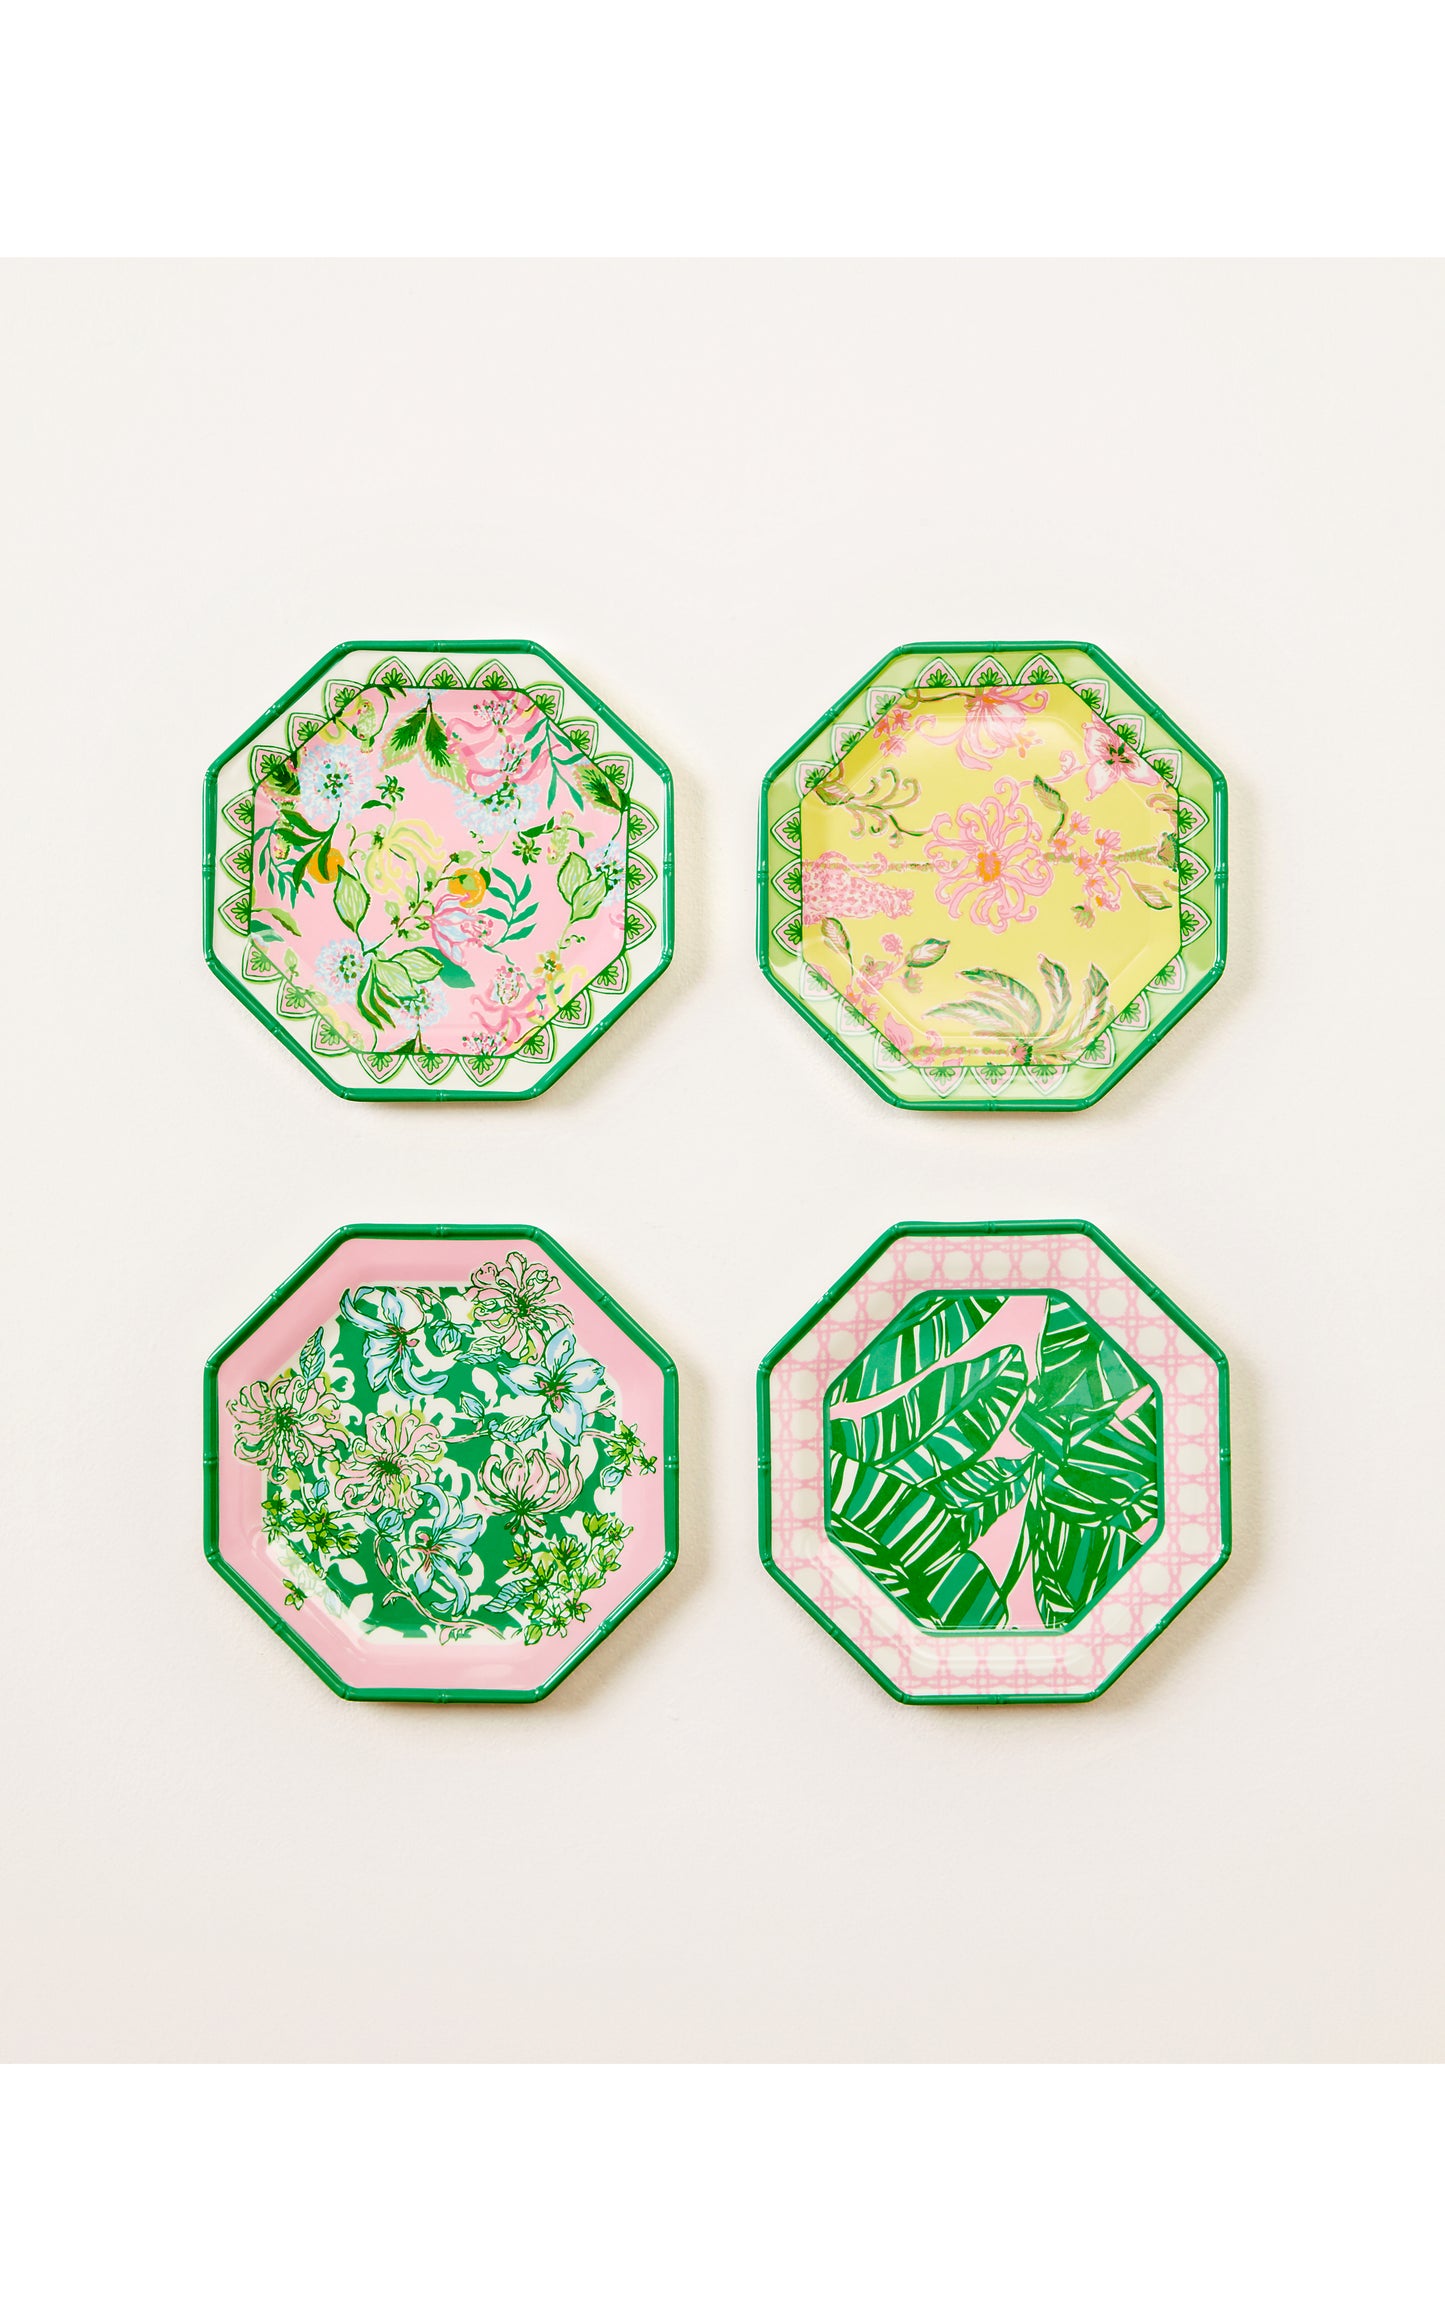 Printed Melamine Appetizer Plate Set in Multi Engineered Plates